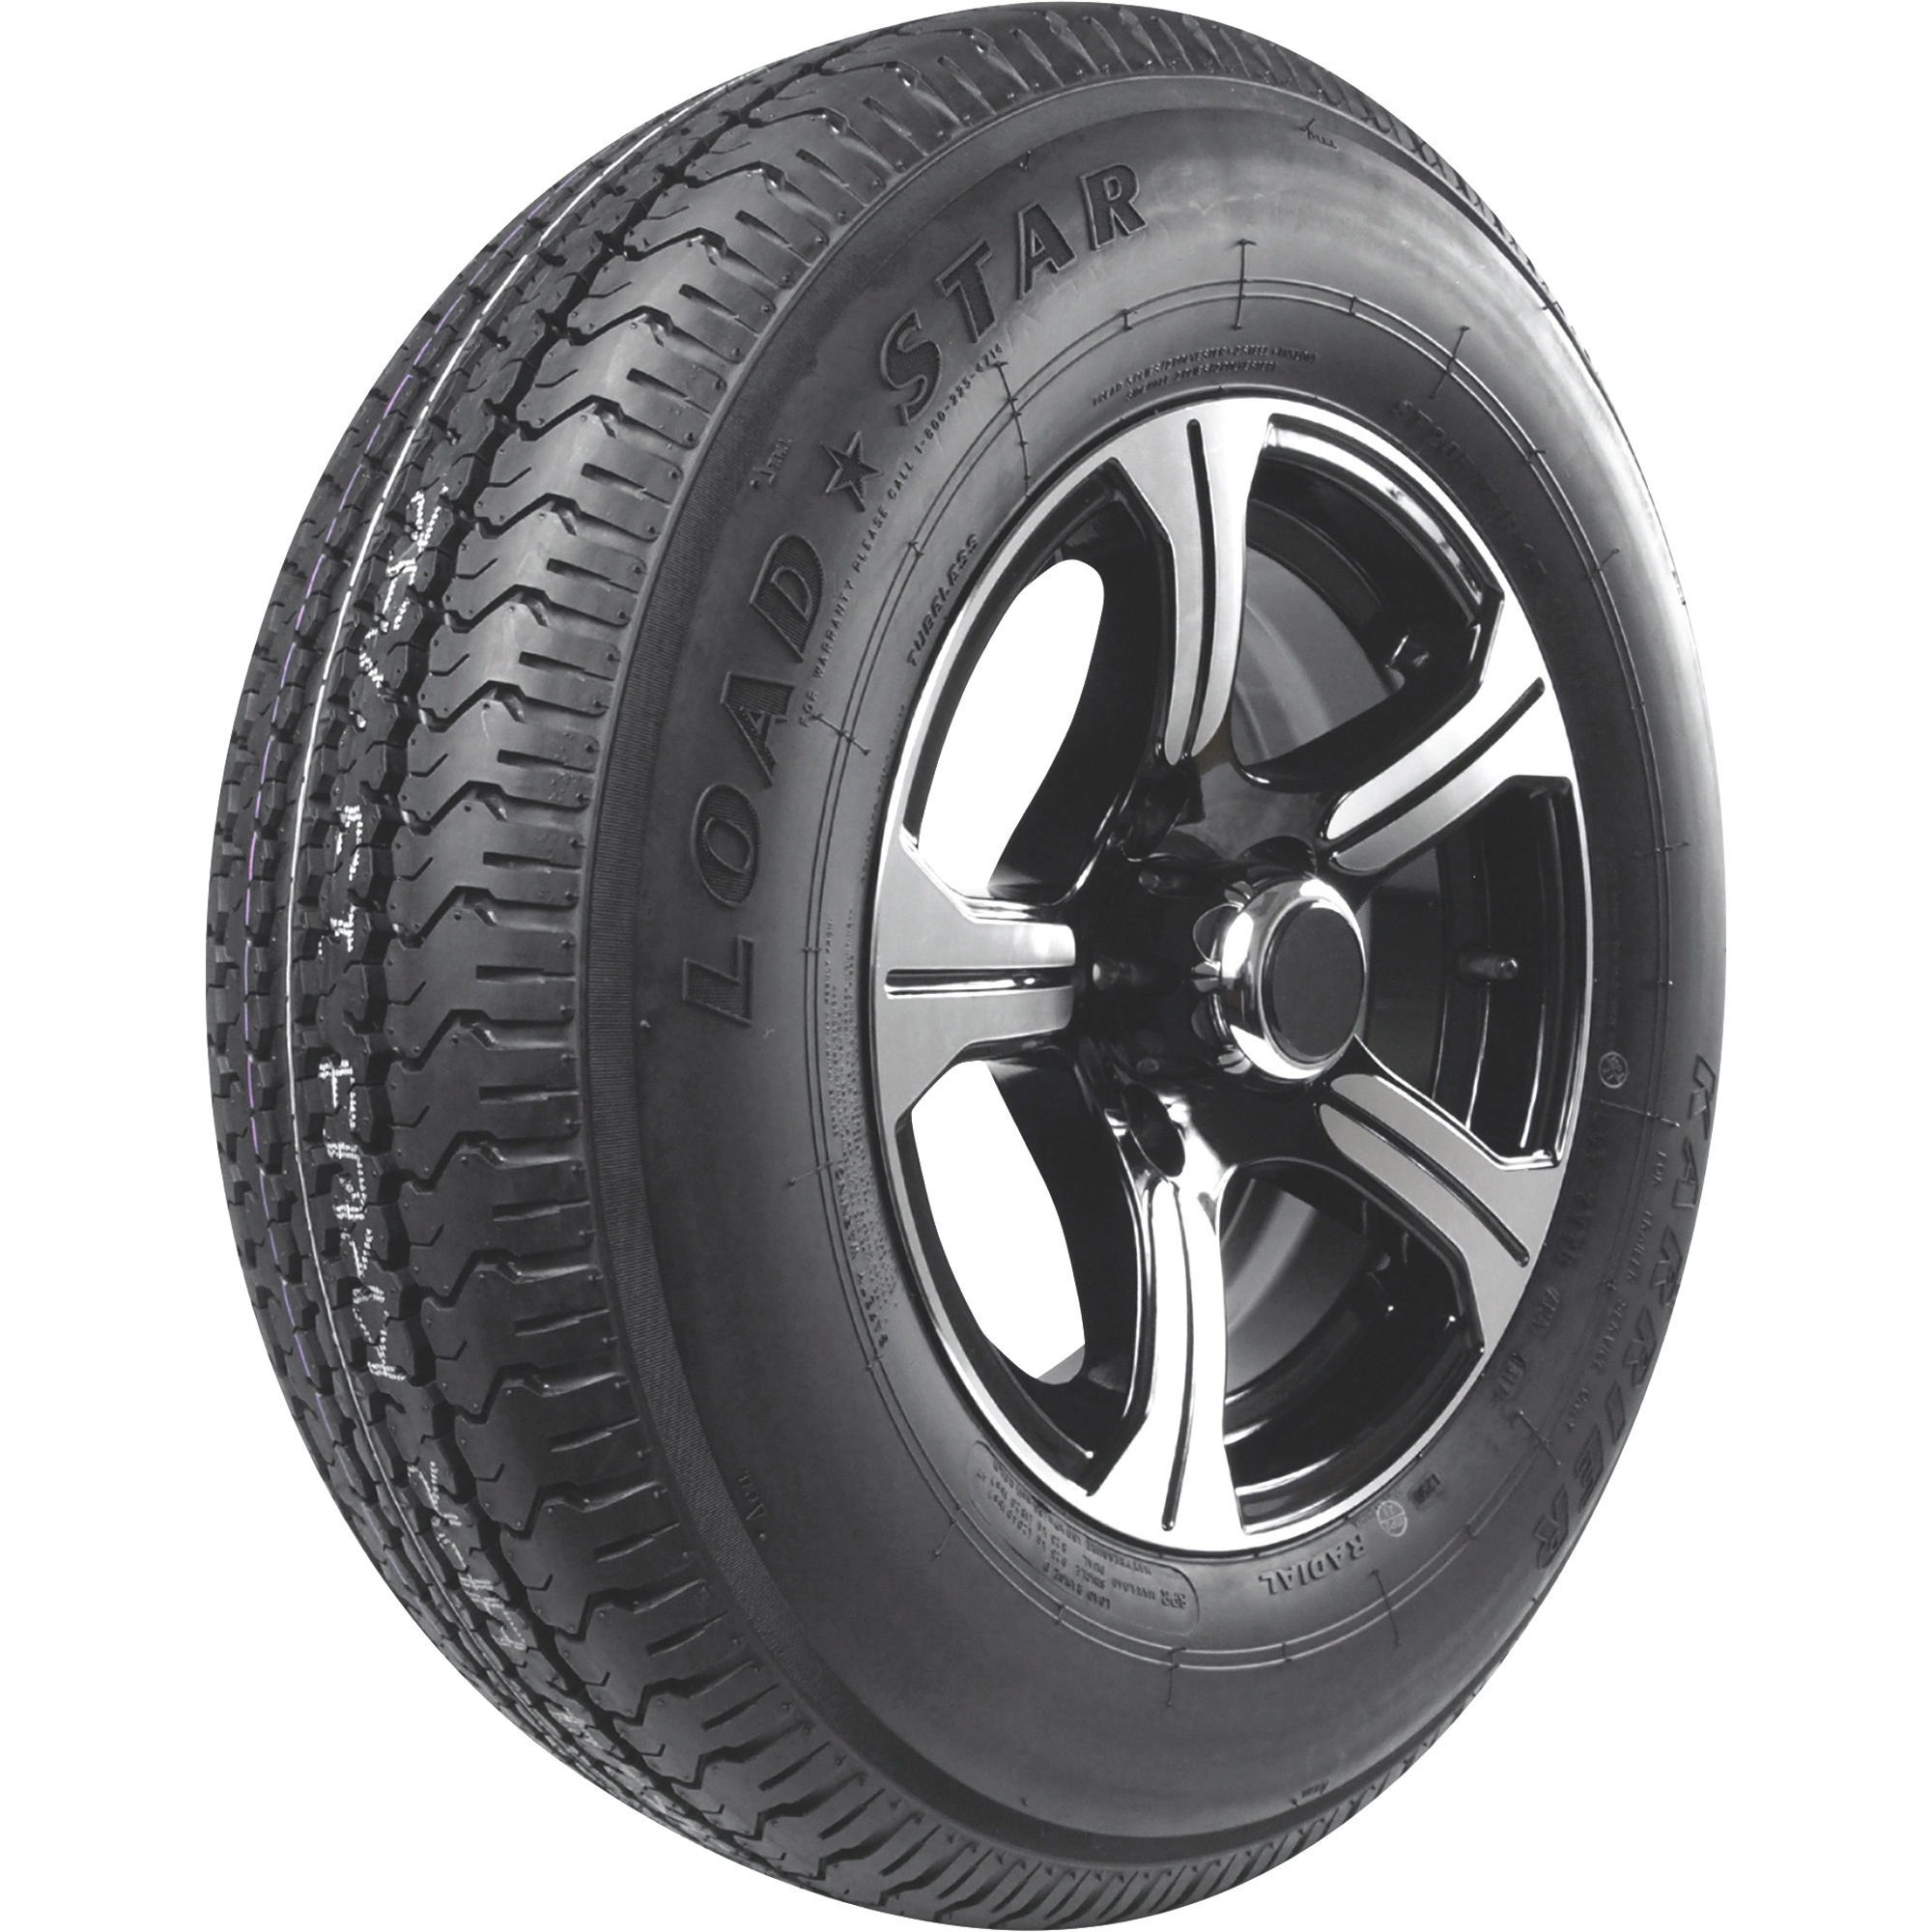 Kenda Loadstar Karrier Radial Trailer Tire and 5-Hole Aluminum Wheel with Hub Cap — 205/75R–15 LRC, Black -  Martin Wheel, DM205R5C-5AMBM